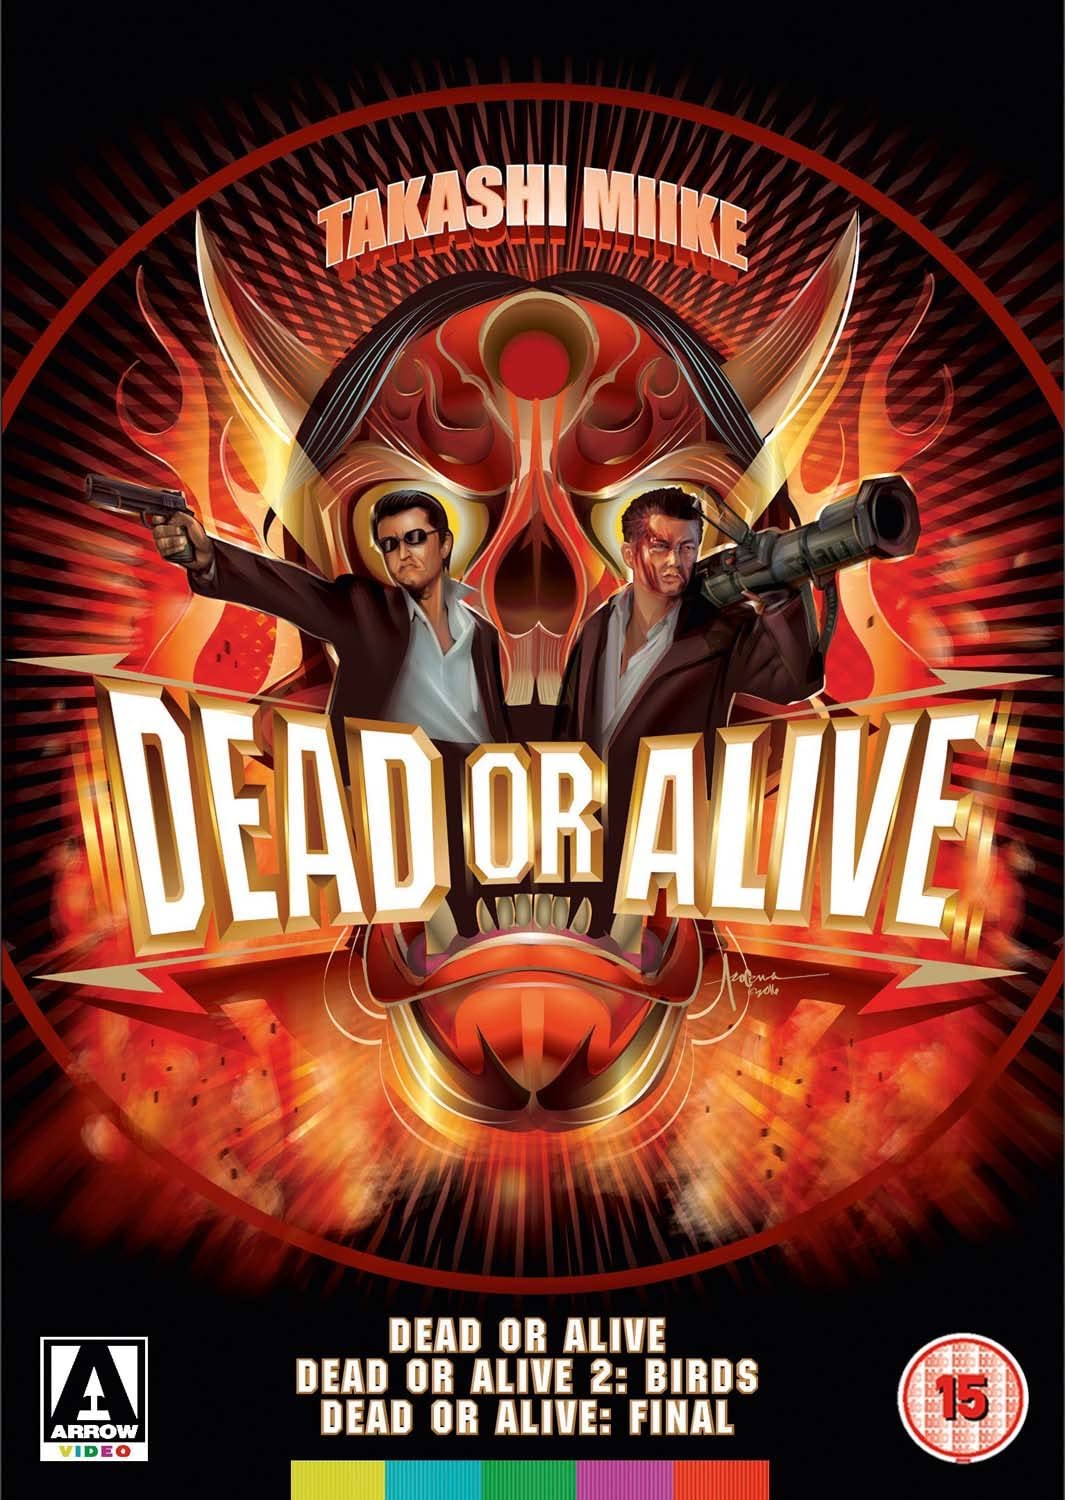 Dead or Alive Trilogy - Action/Adventure [DVD]